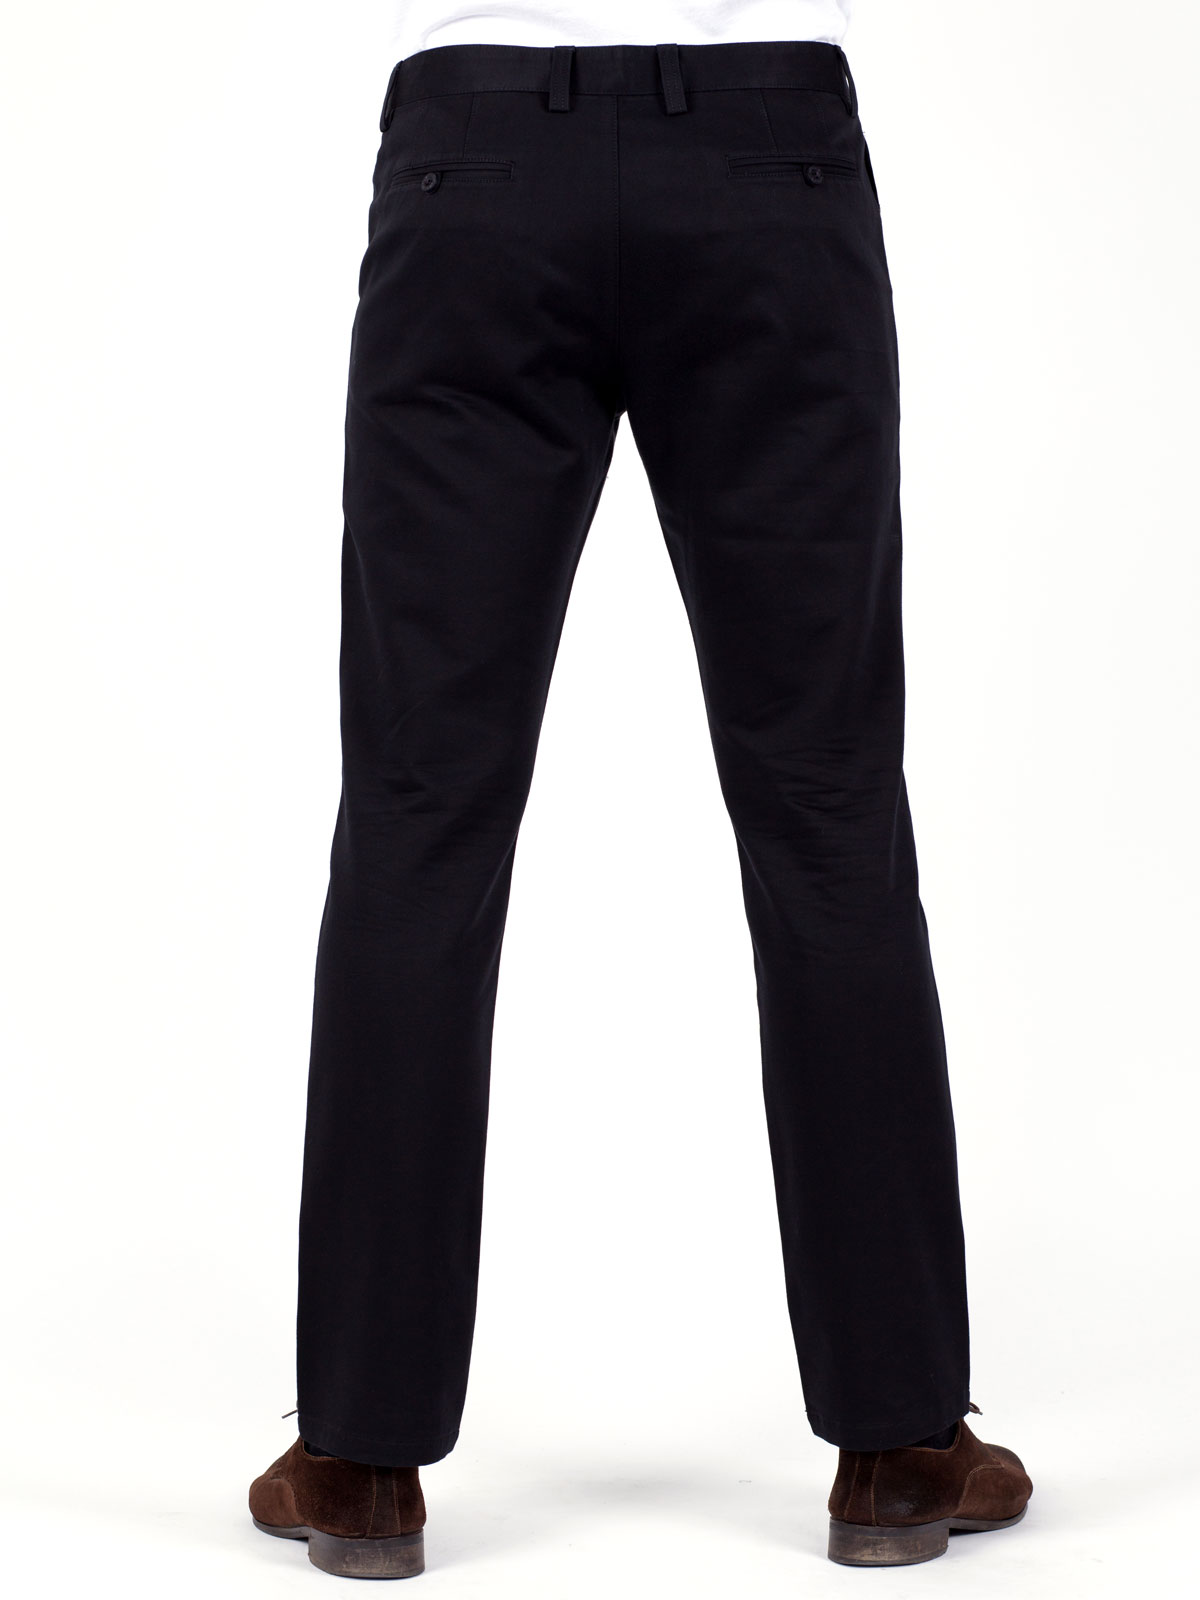 Pantaloni negri din bumbac cu elastan - 60208 € 11.25 img2